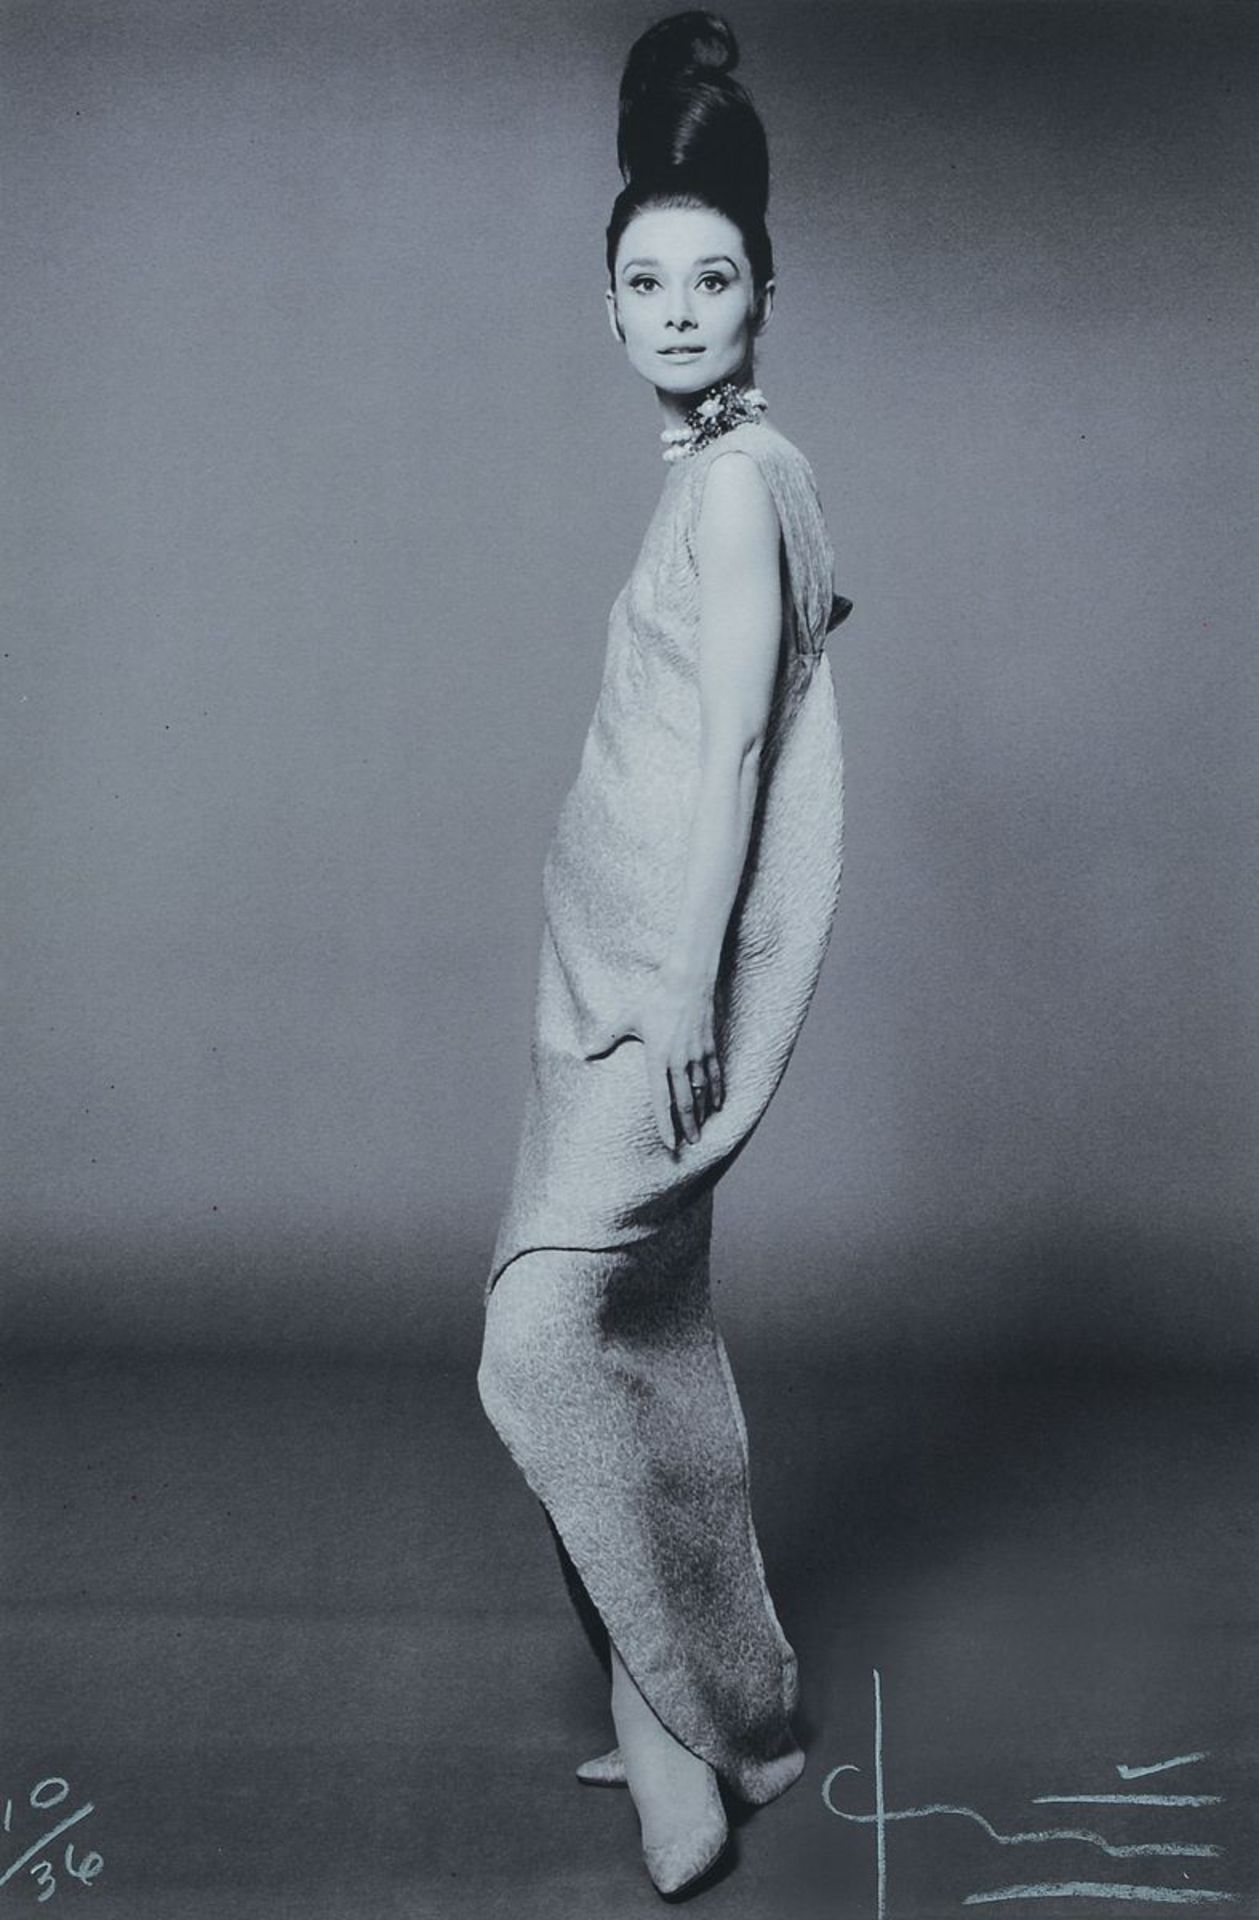 Bert Stern, 1926 - 2013, Audrey Hepburn, Fotografie, Irisprint auf festem mattem Fotopapier,